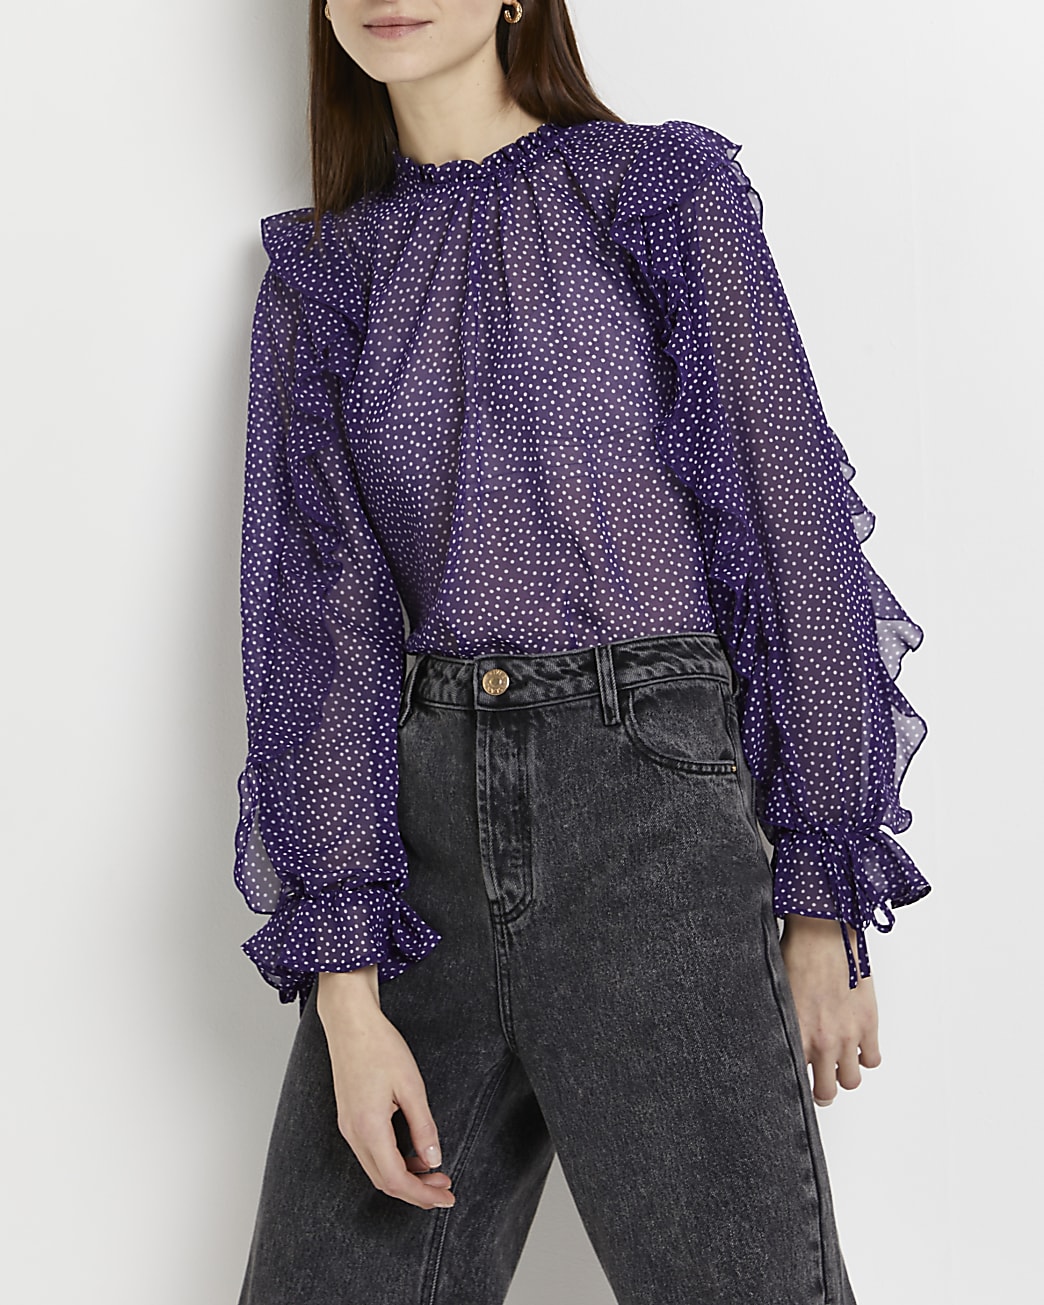 Purple polka dot chiffon blouse